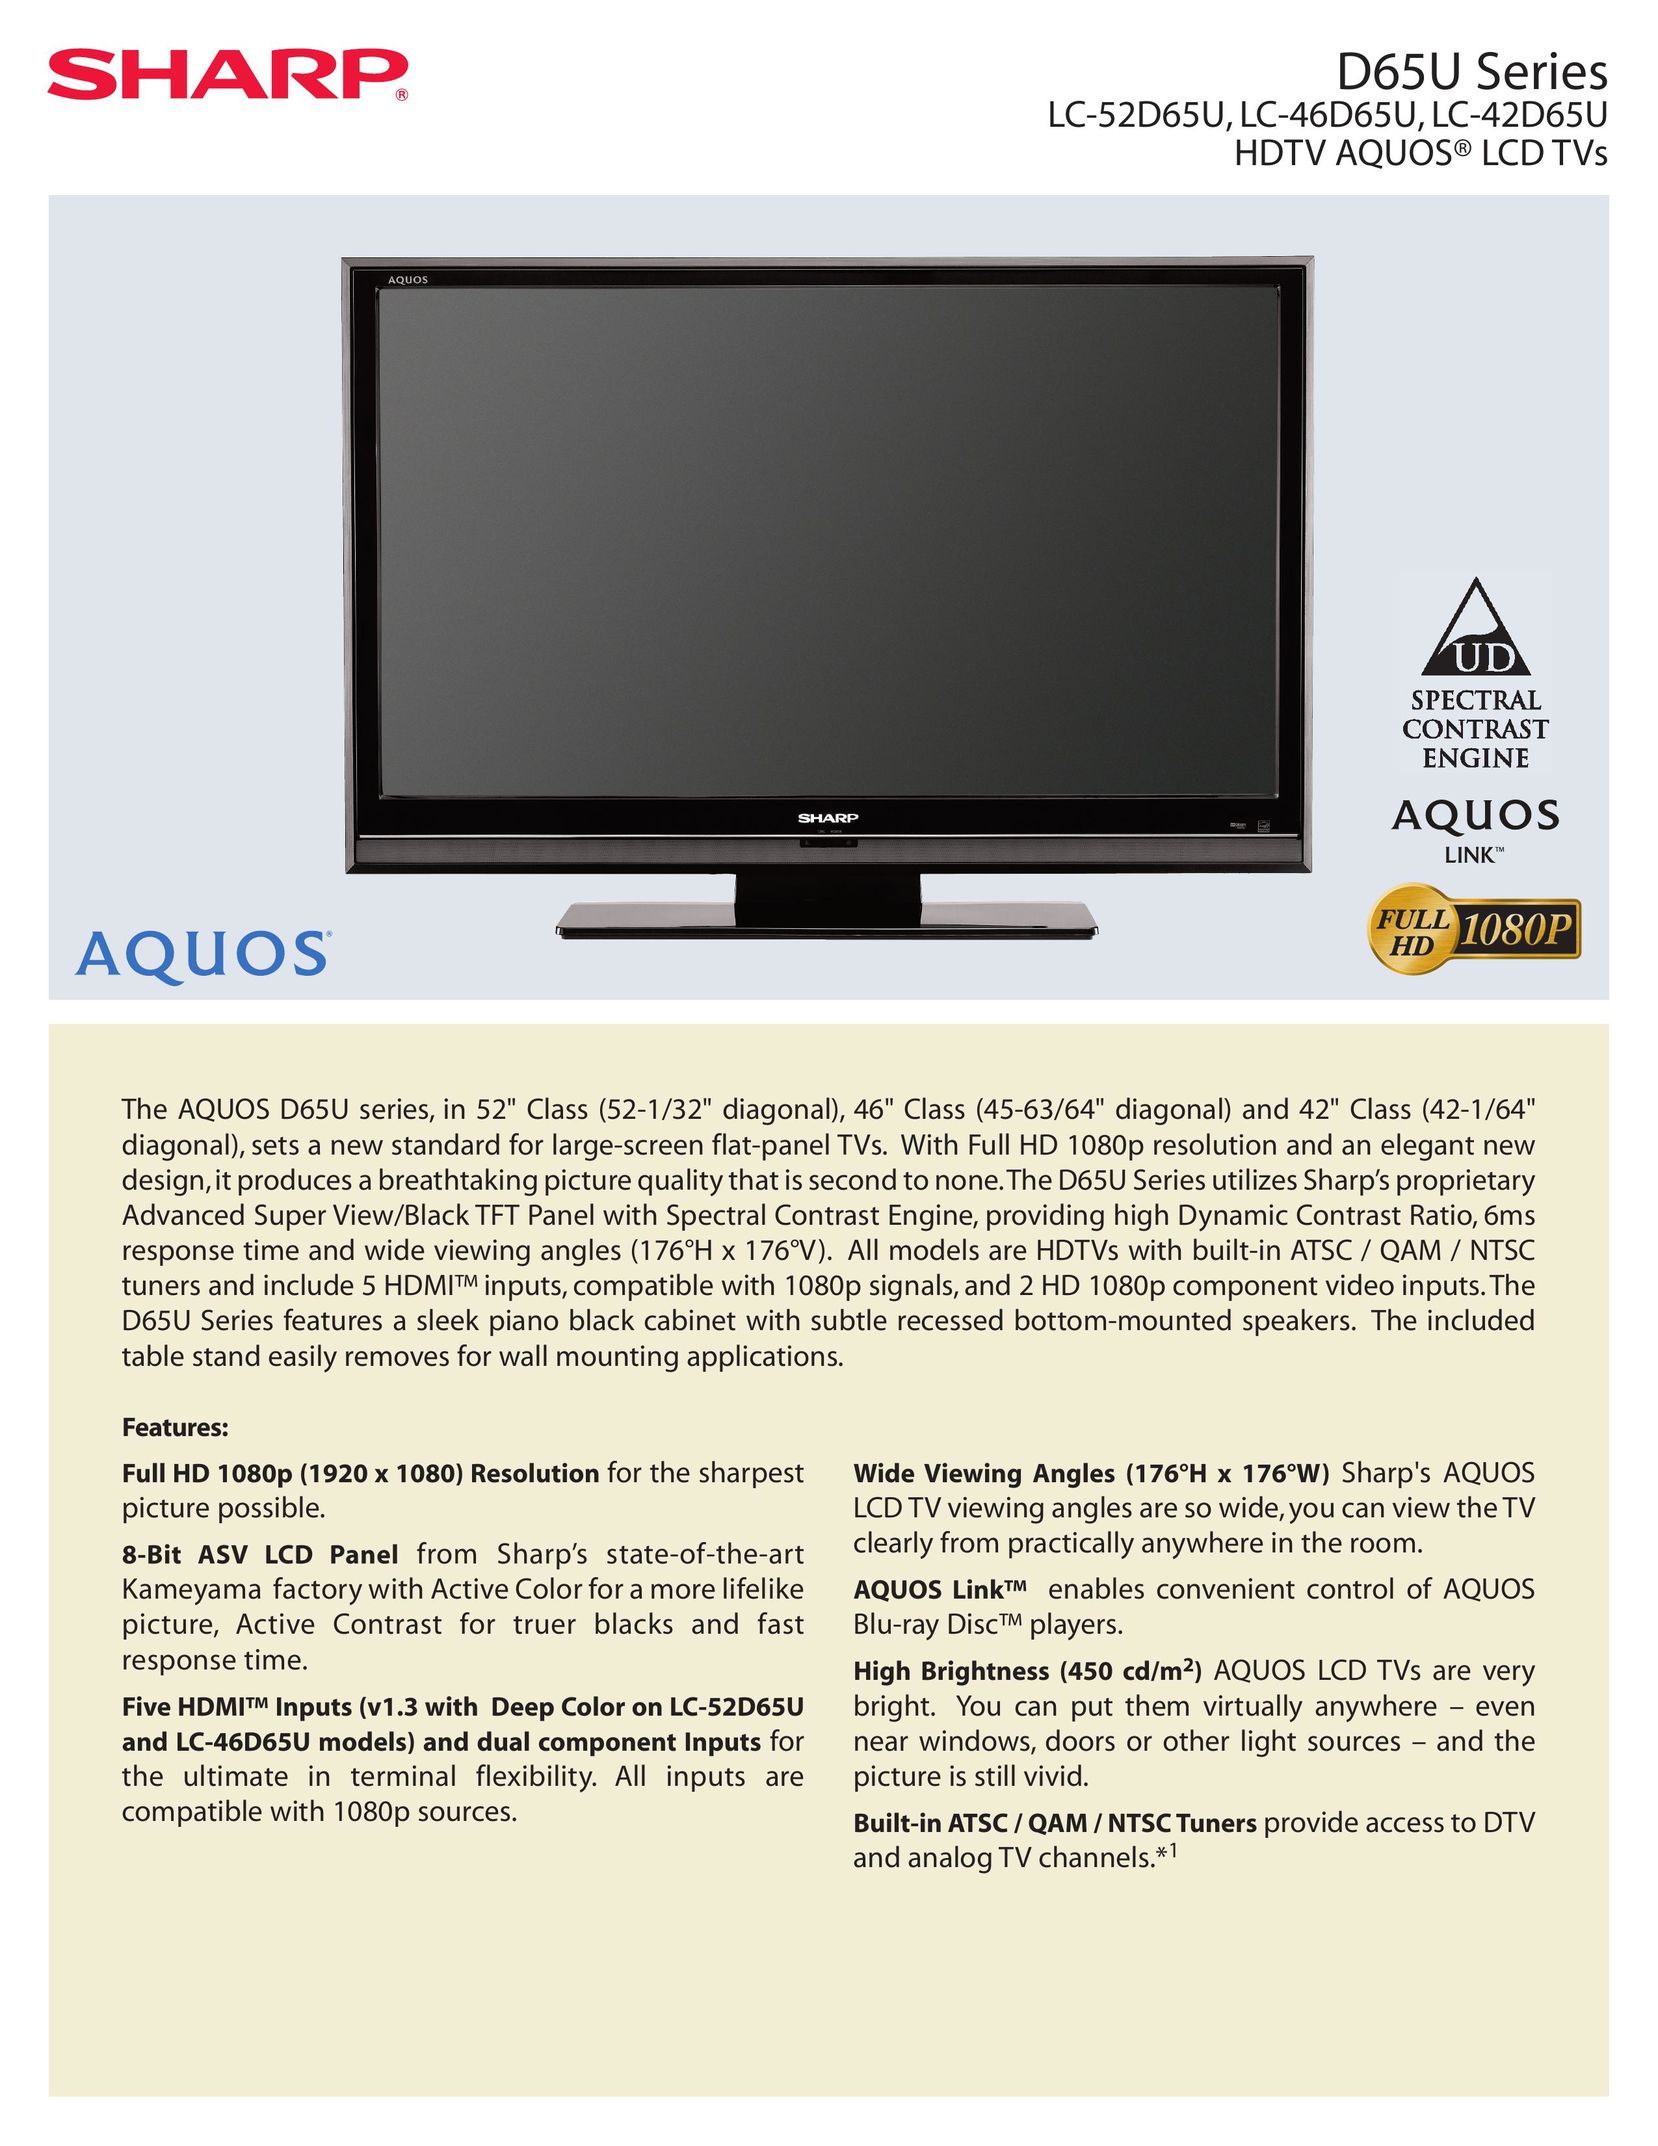 Sharp D65U Series Flat Panel Television User Manual